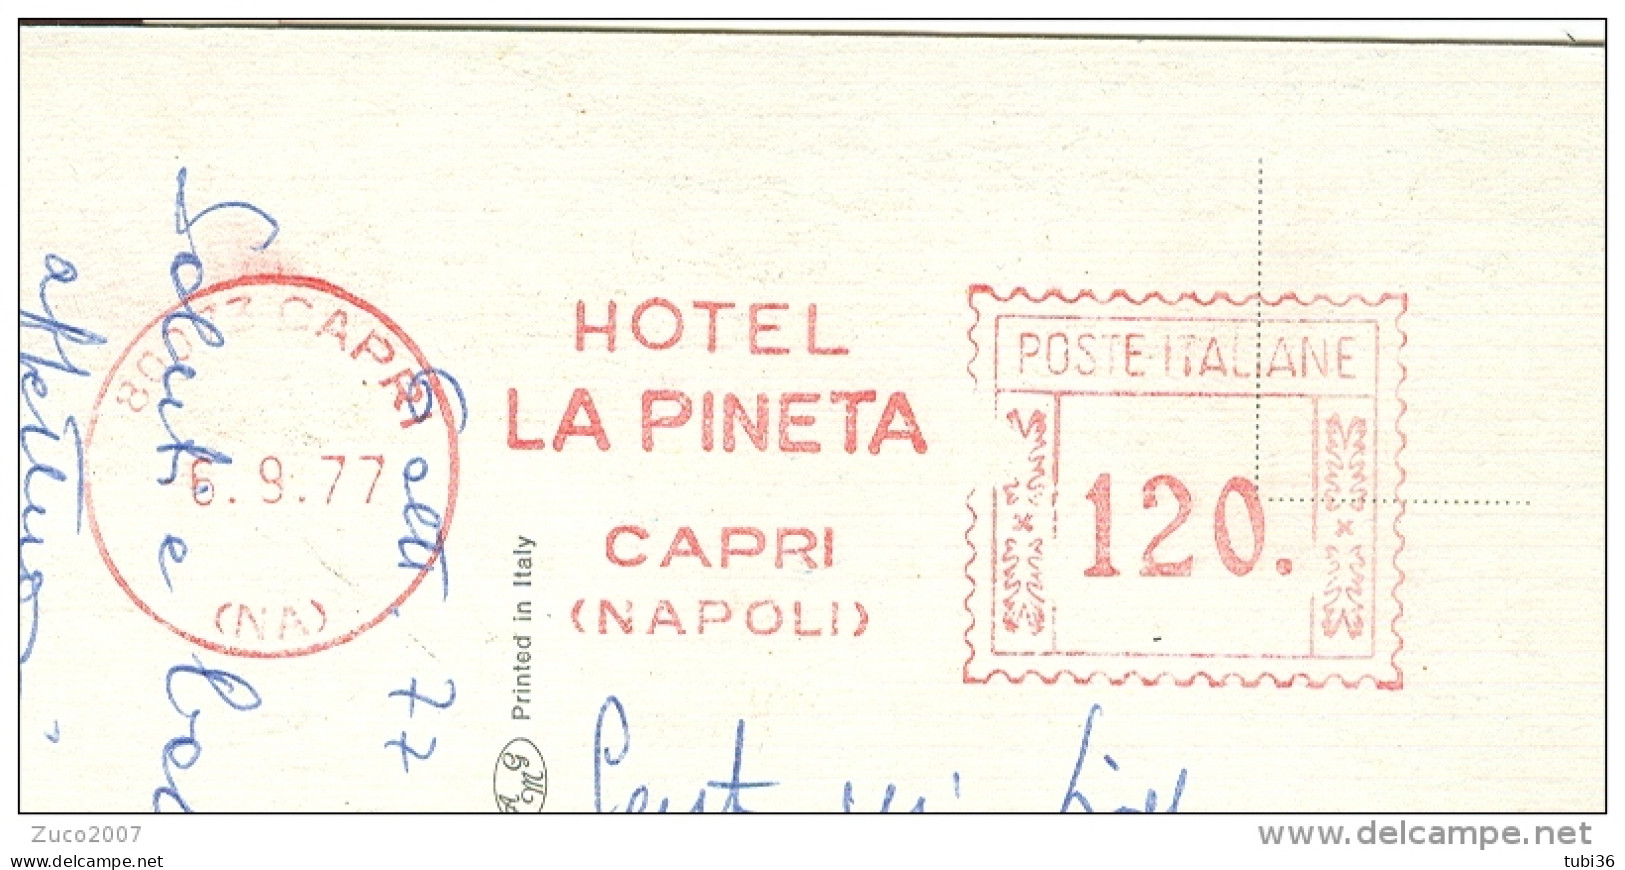 HOTEL LA PINETA, CAPRI, NAPOLI, AFFRANCATURA MECCANICA ROSSA £.120, 1977, CARTOLINA PER RAVENNA, - Hotels- Horeca